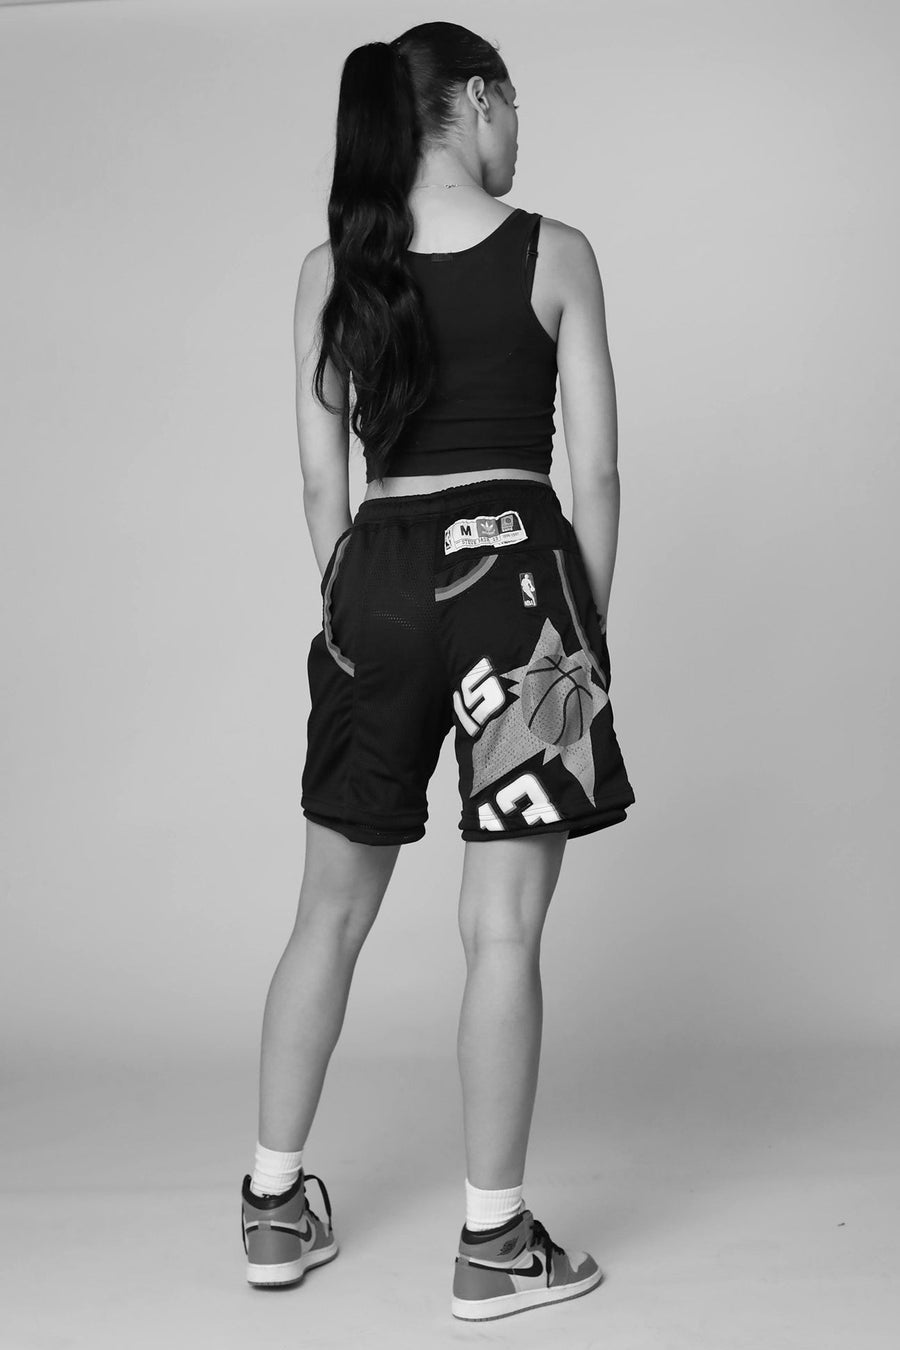 Unisex Rework Golden State Warriors NBA Jersey Shorts - M